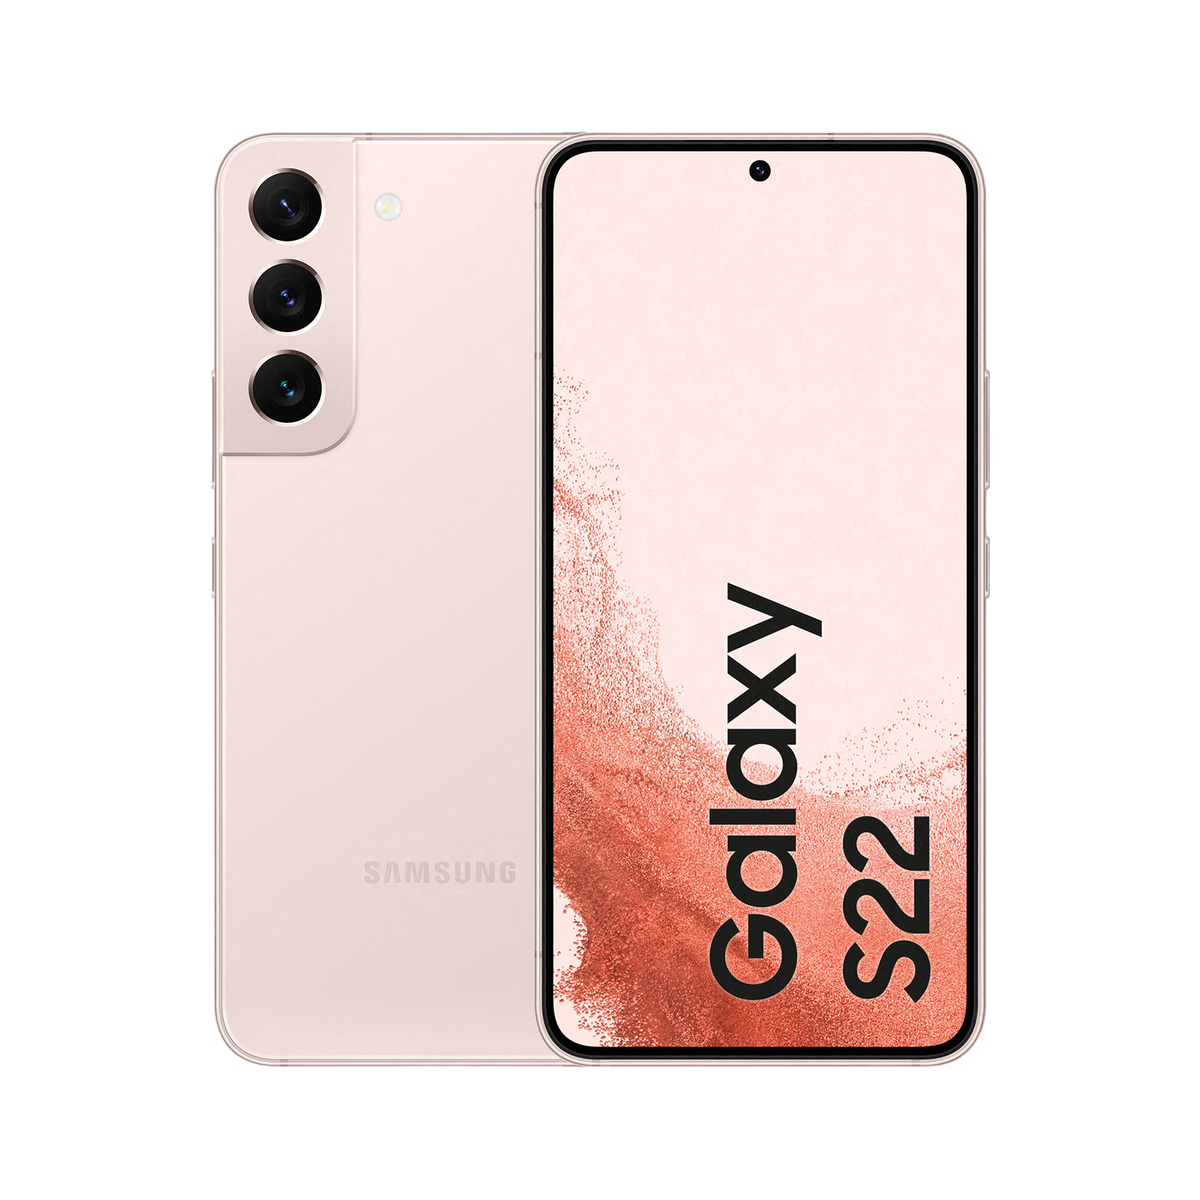 128 SAMSUNG 5G 128GB S22 pink pink Galaxy SIM Dual GB gold